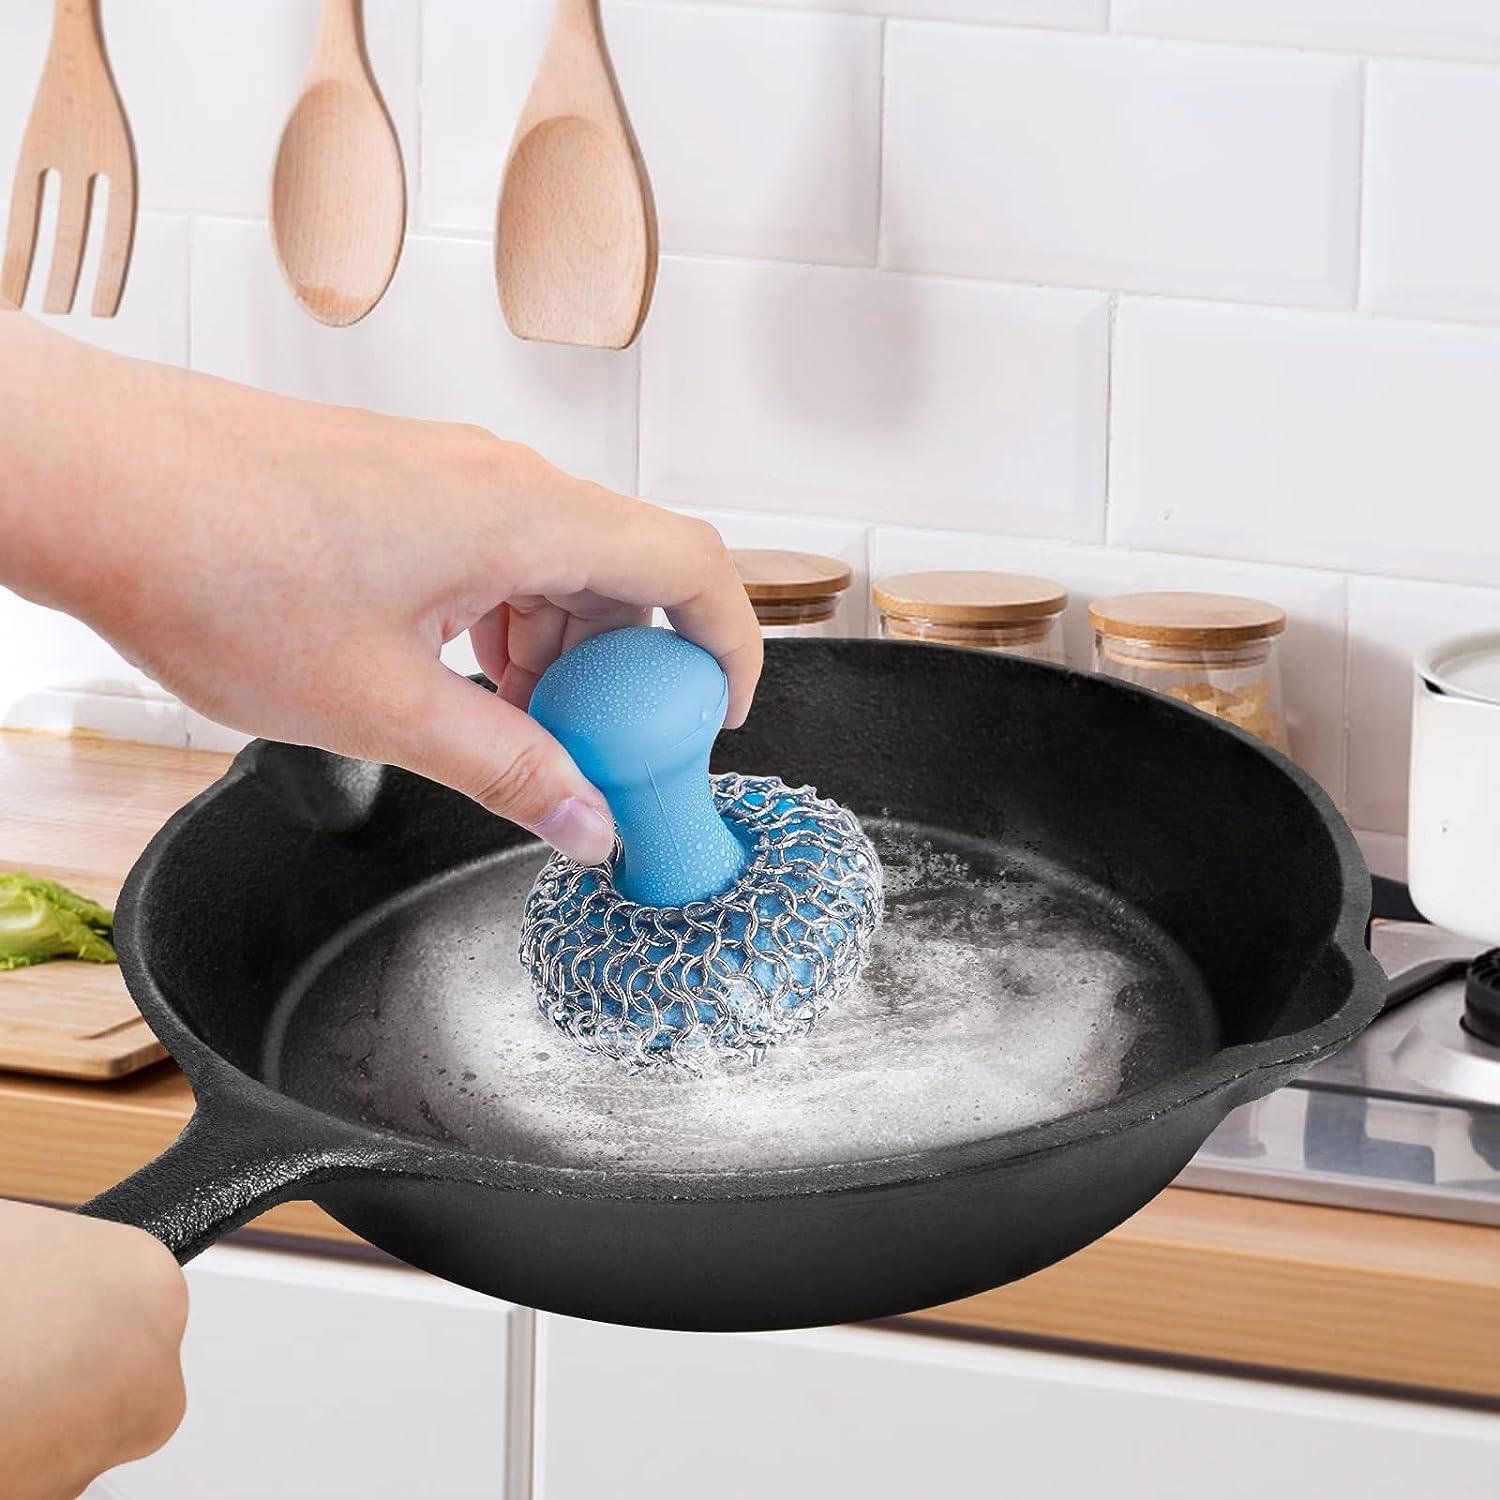 LOT OF 2 Kitchen Dish Scrub Brush Cleaning Scrubber Dishes Washing Scraper